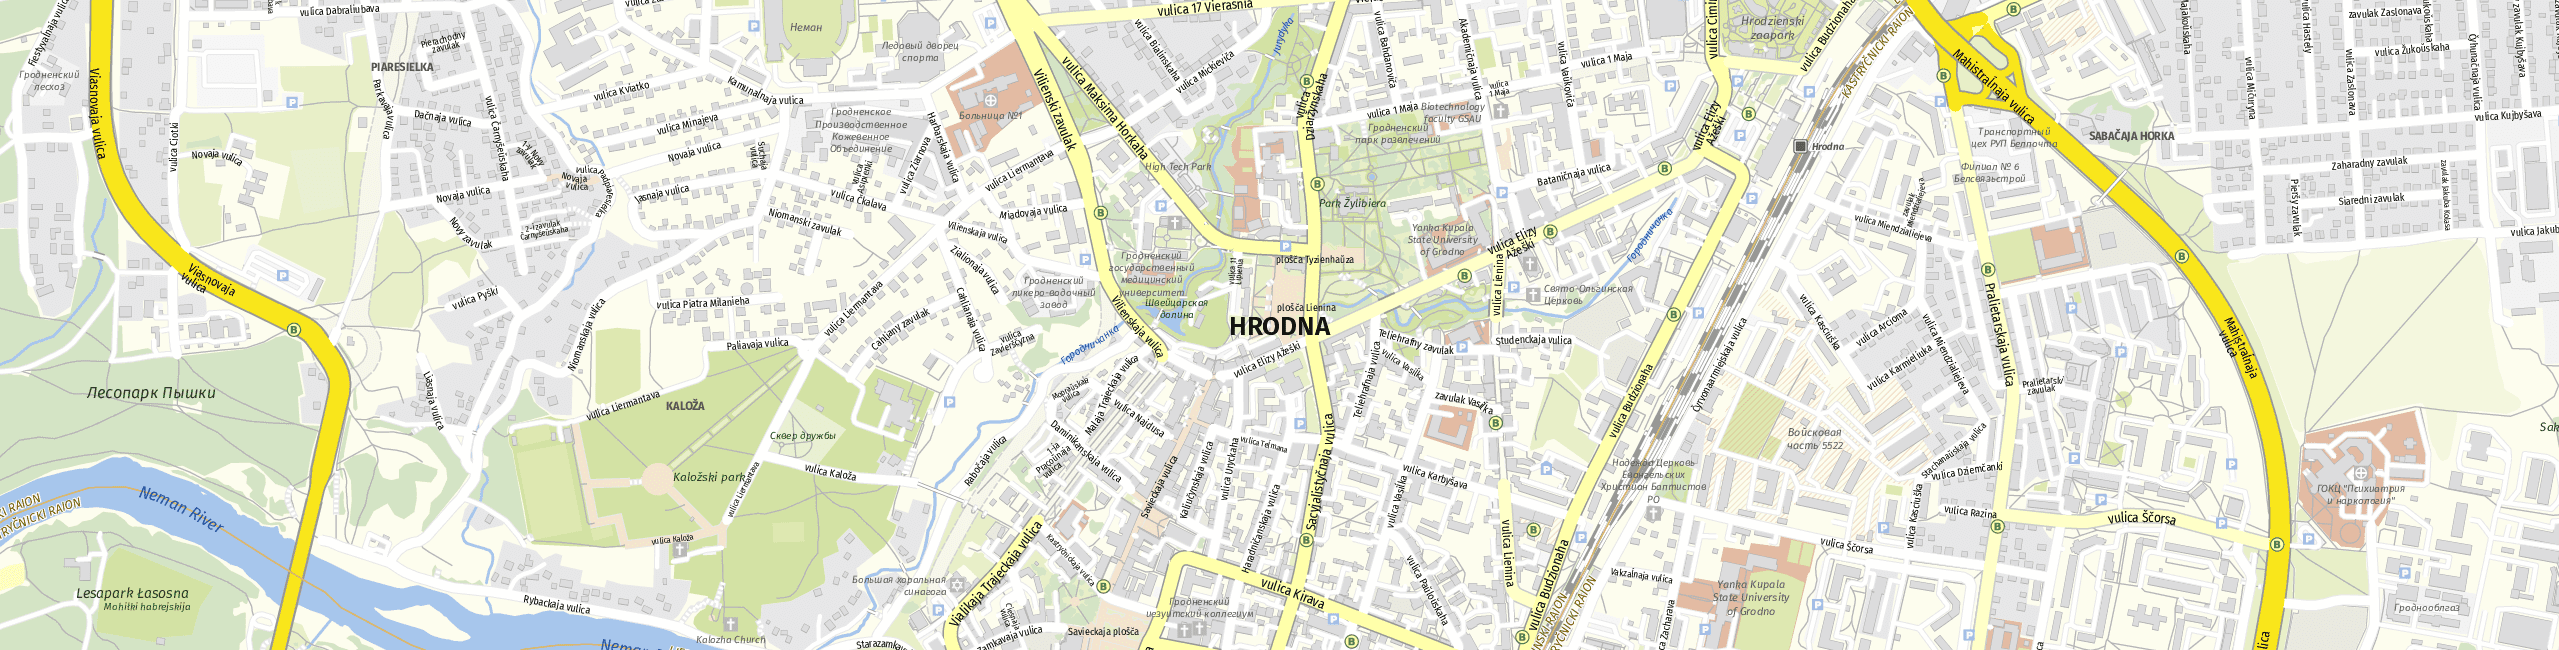 Stadtplan Hrodna zum Downloaden.